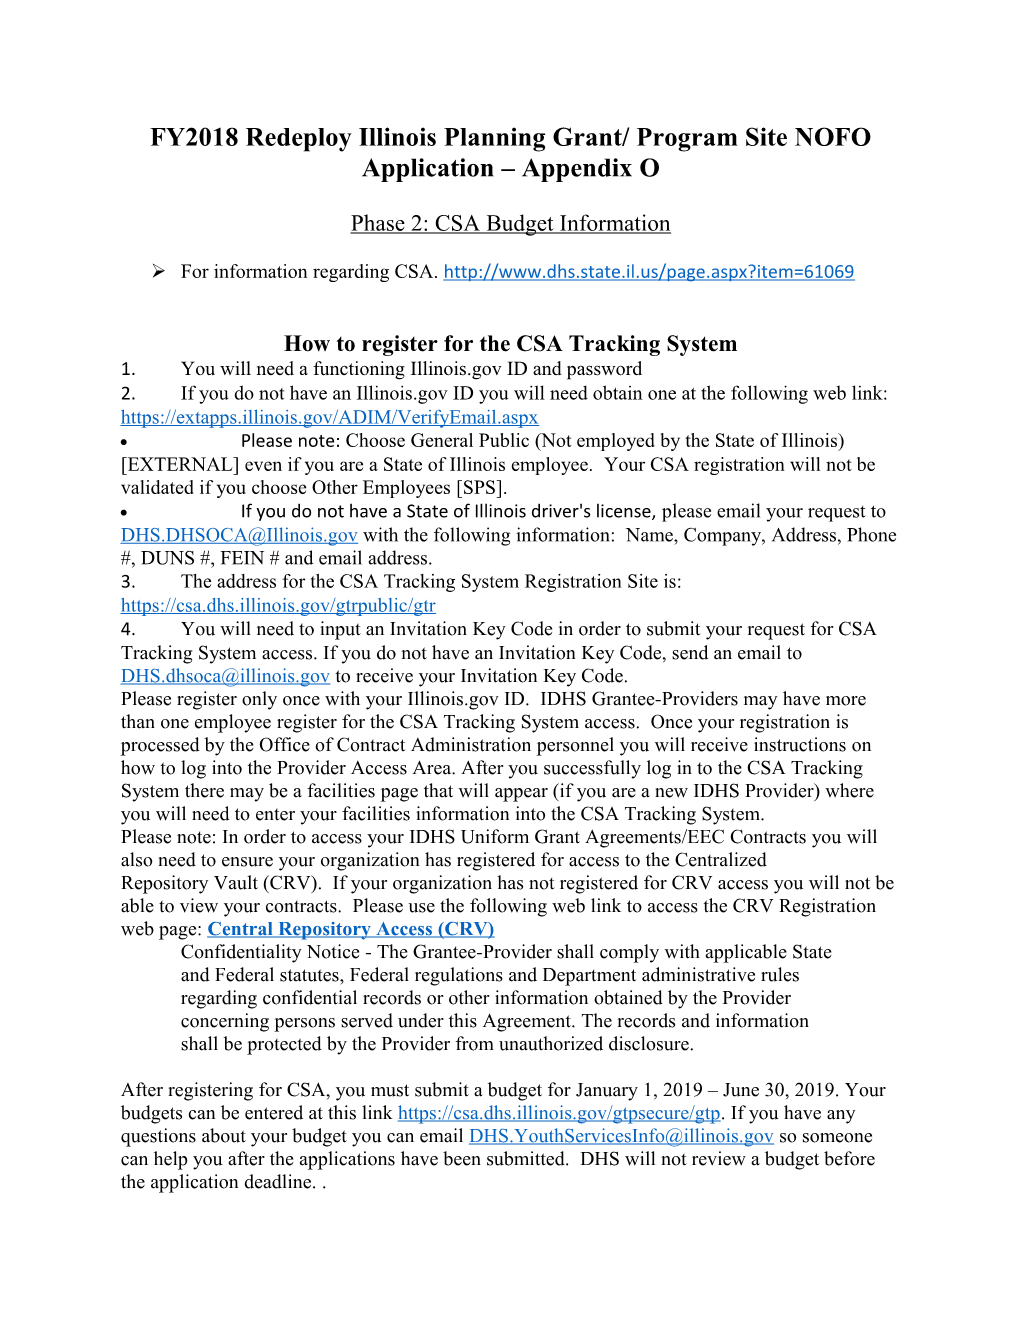 FY2018 Redeploy Illinois Planning Grant/ Program Site NOFO Application Appendix O